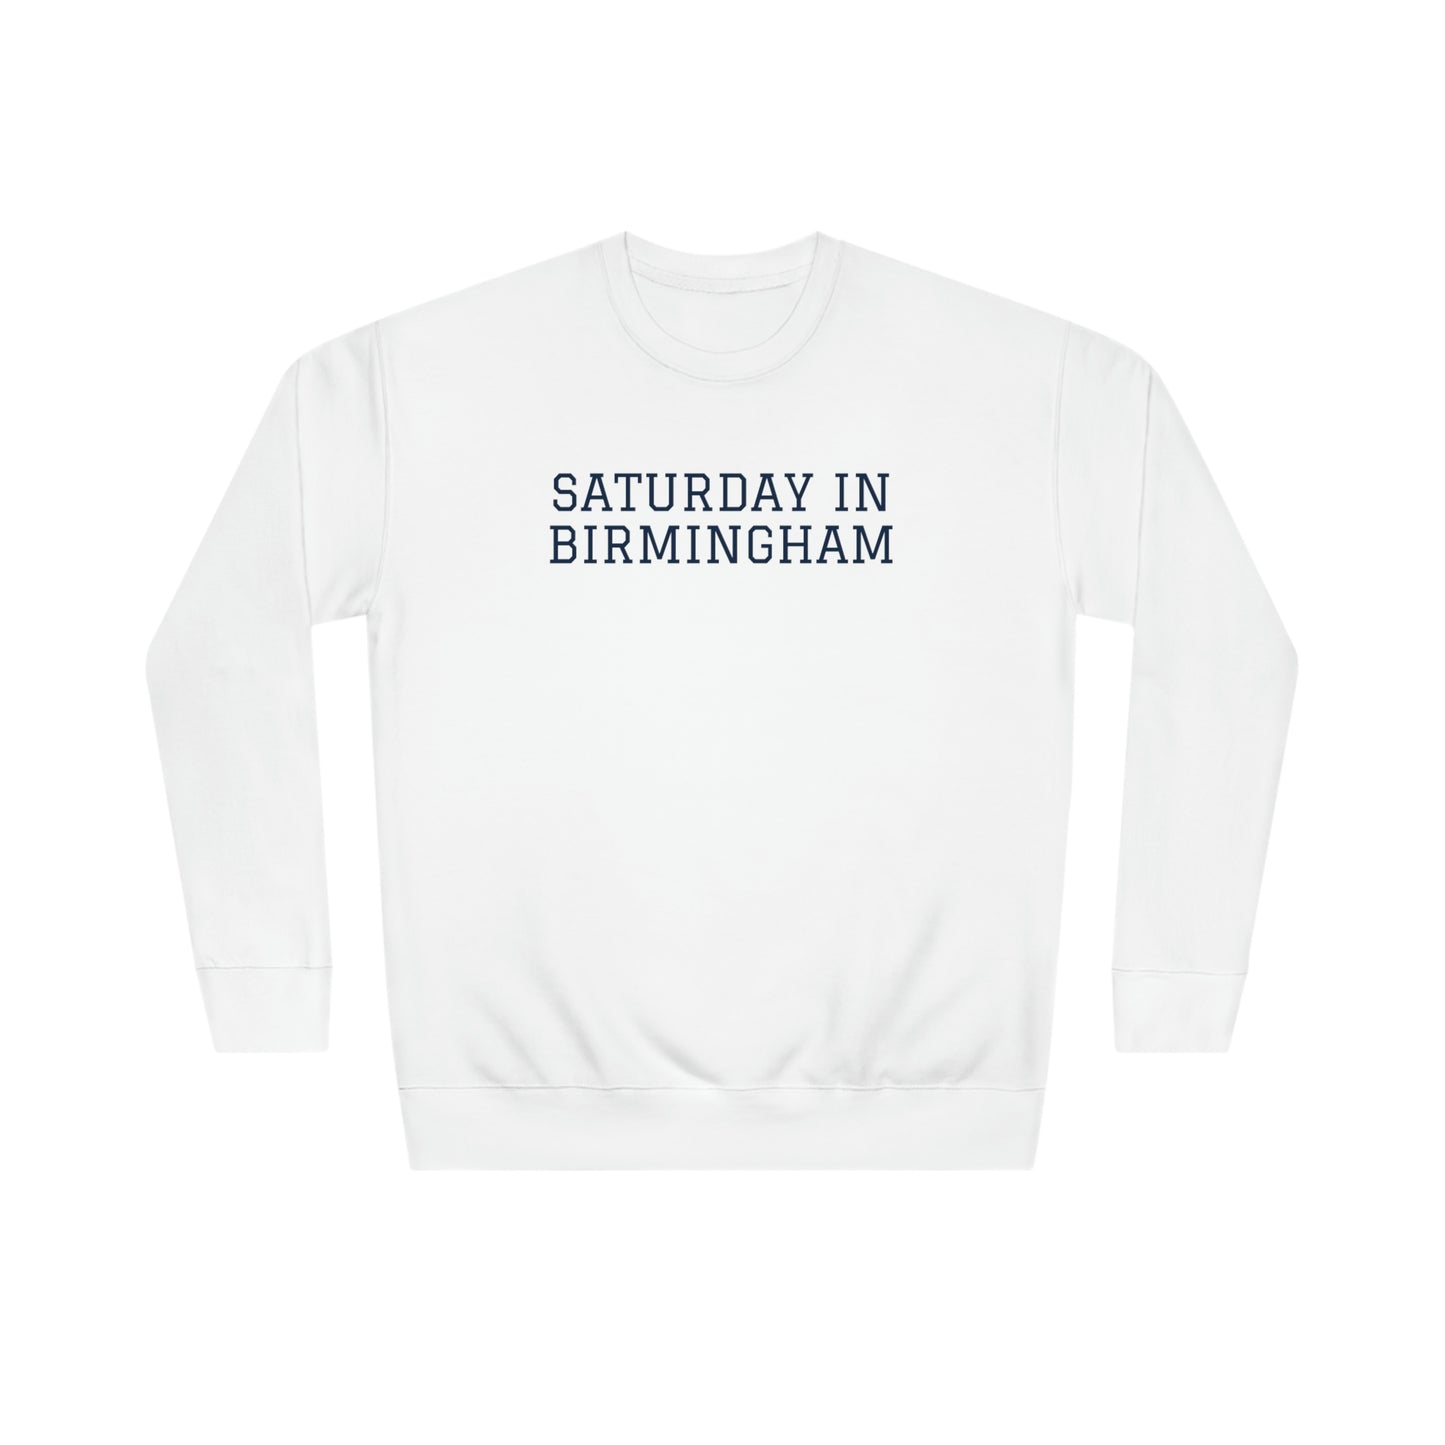 Samford Crew Sweatshirt - GG - CH